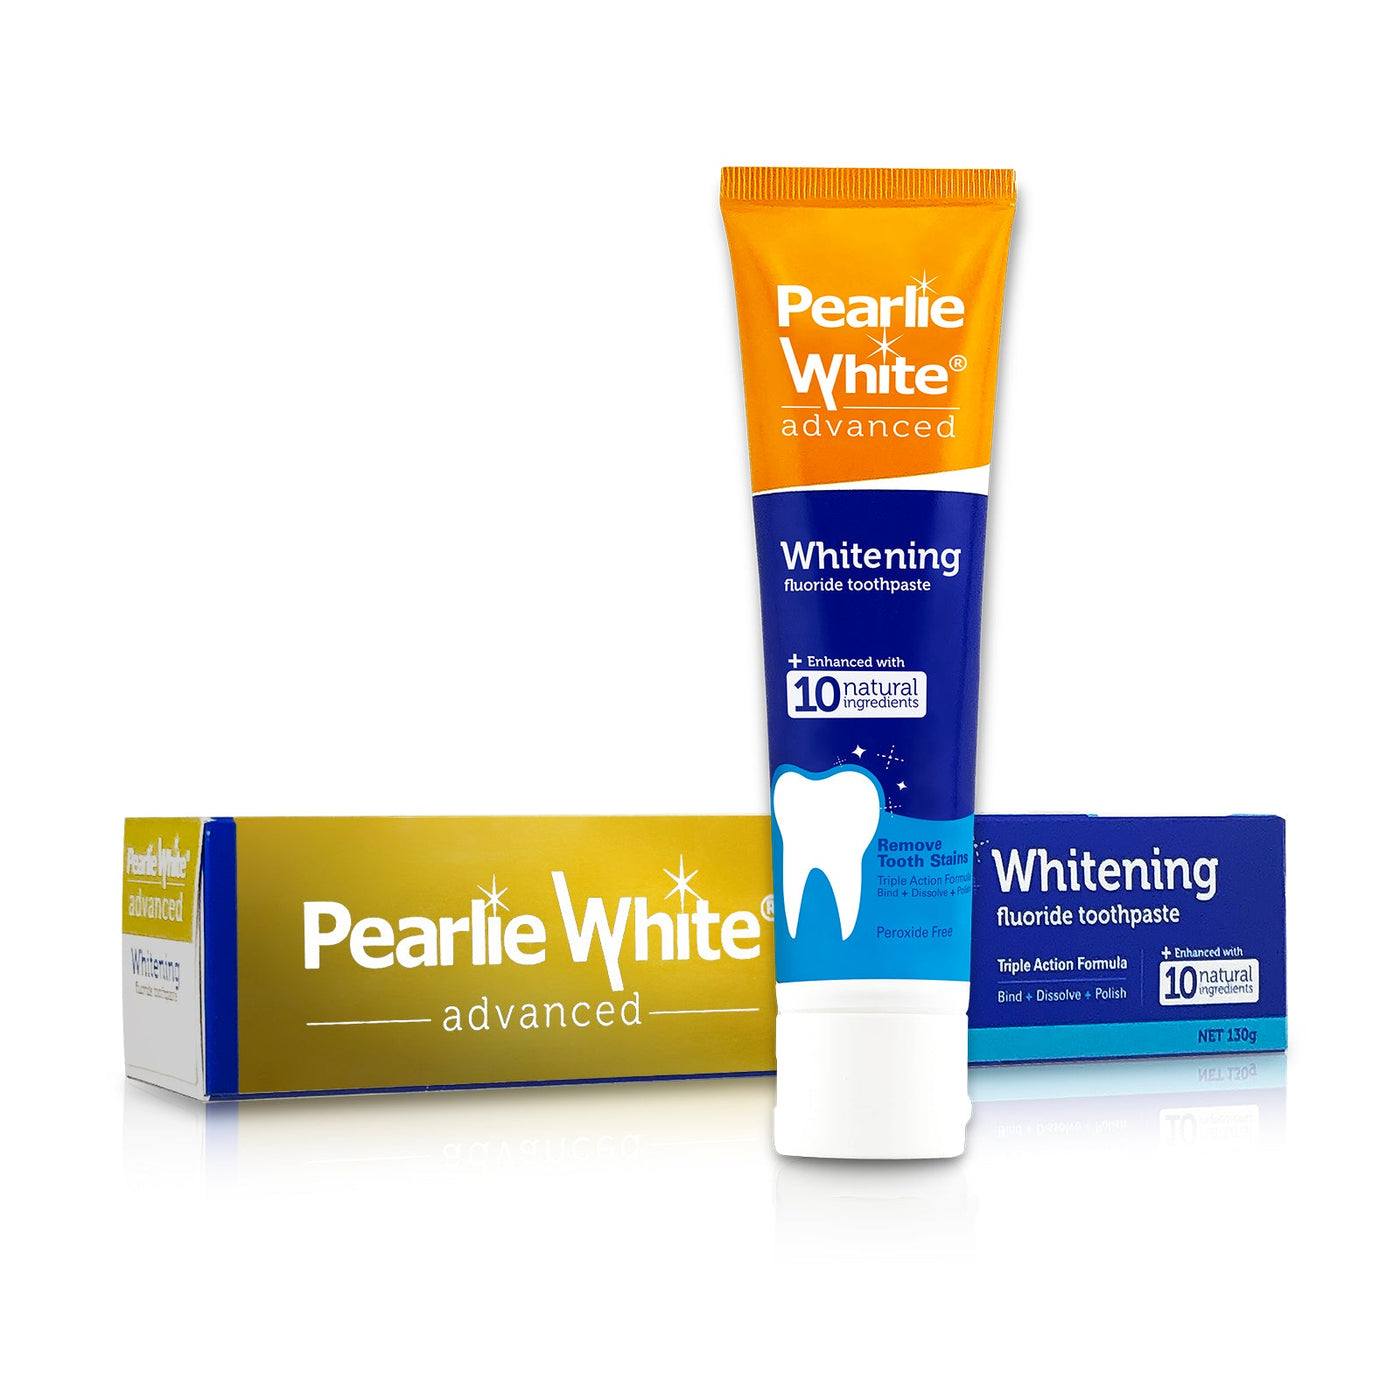 Pearlie White Advanced Whitening Fluoride Toothpaste 130g